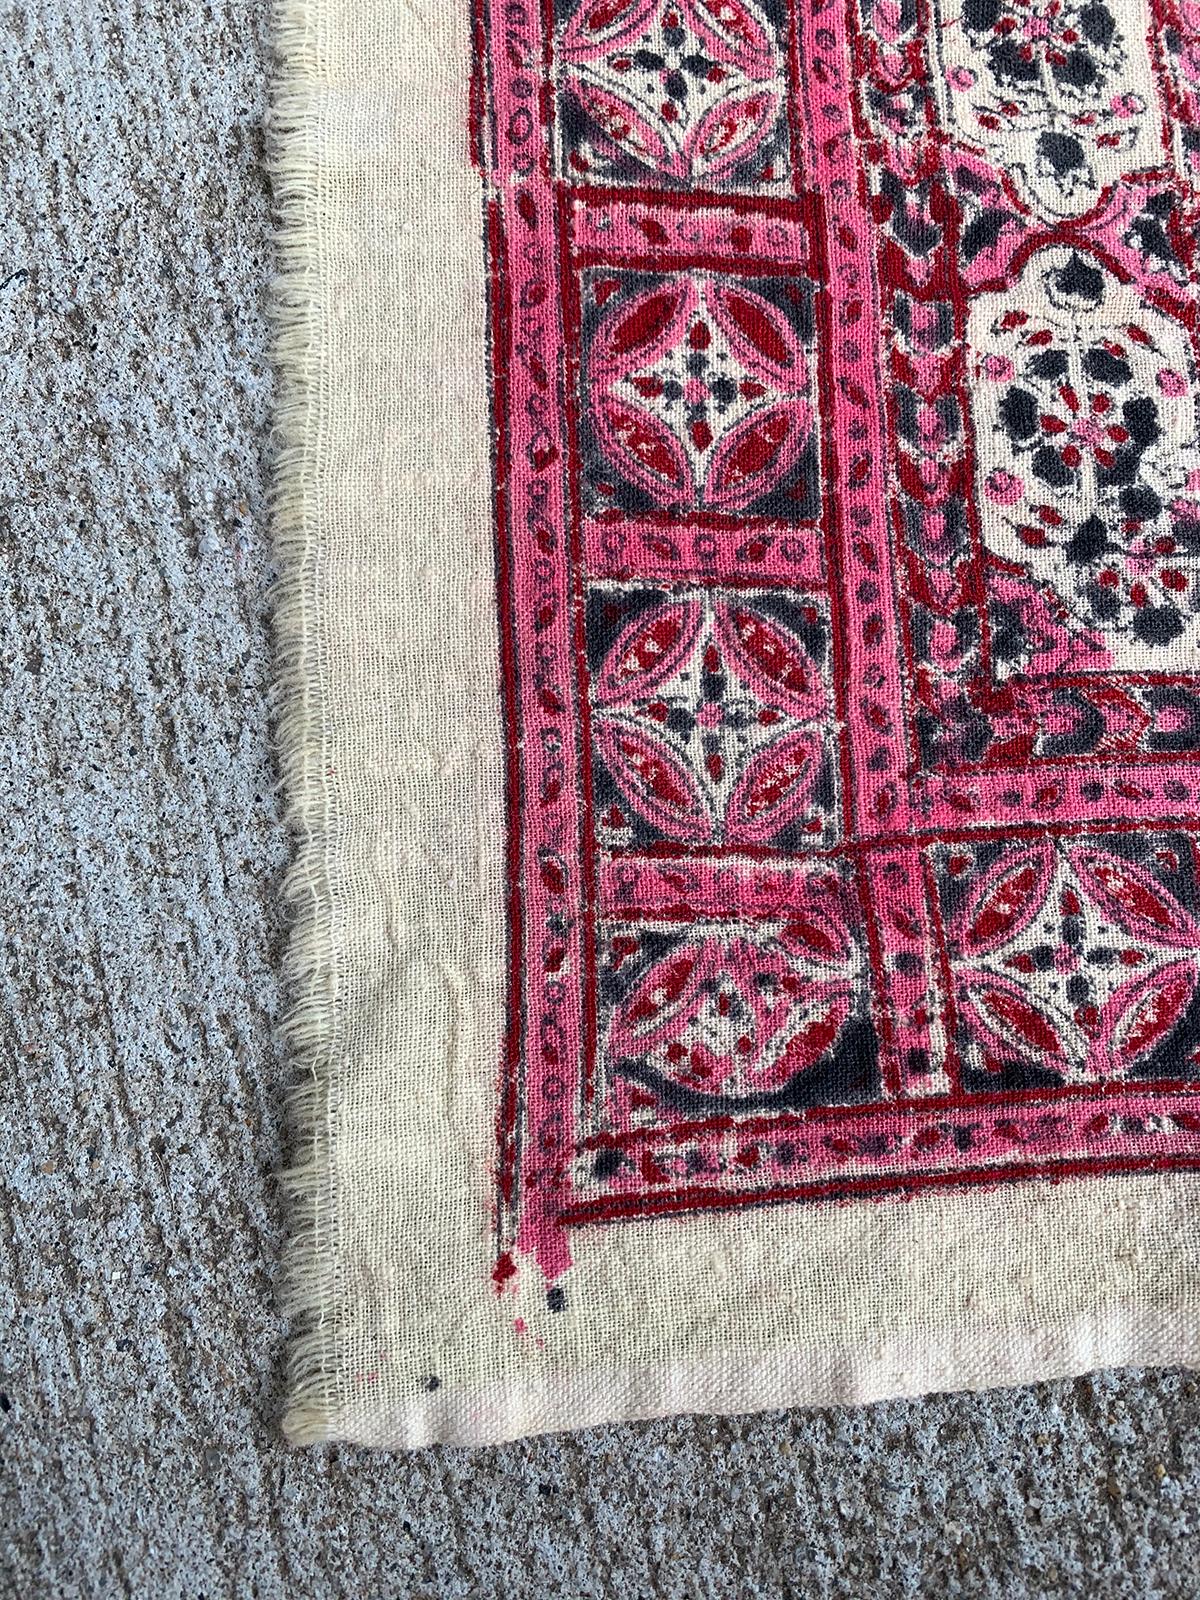 20th Century Indian Pink Lotus Mandala Fabric/Textile In Good Condition For Sale In Atlanta, GA